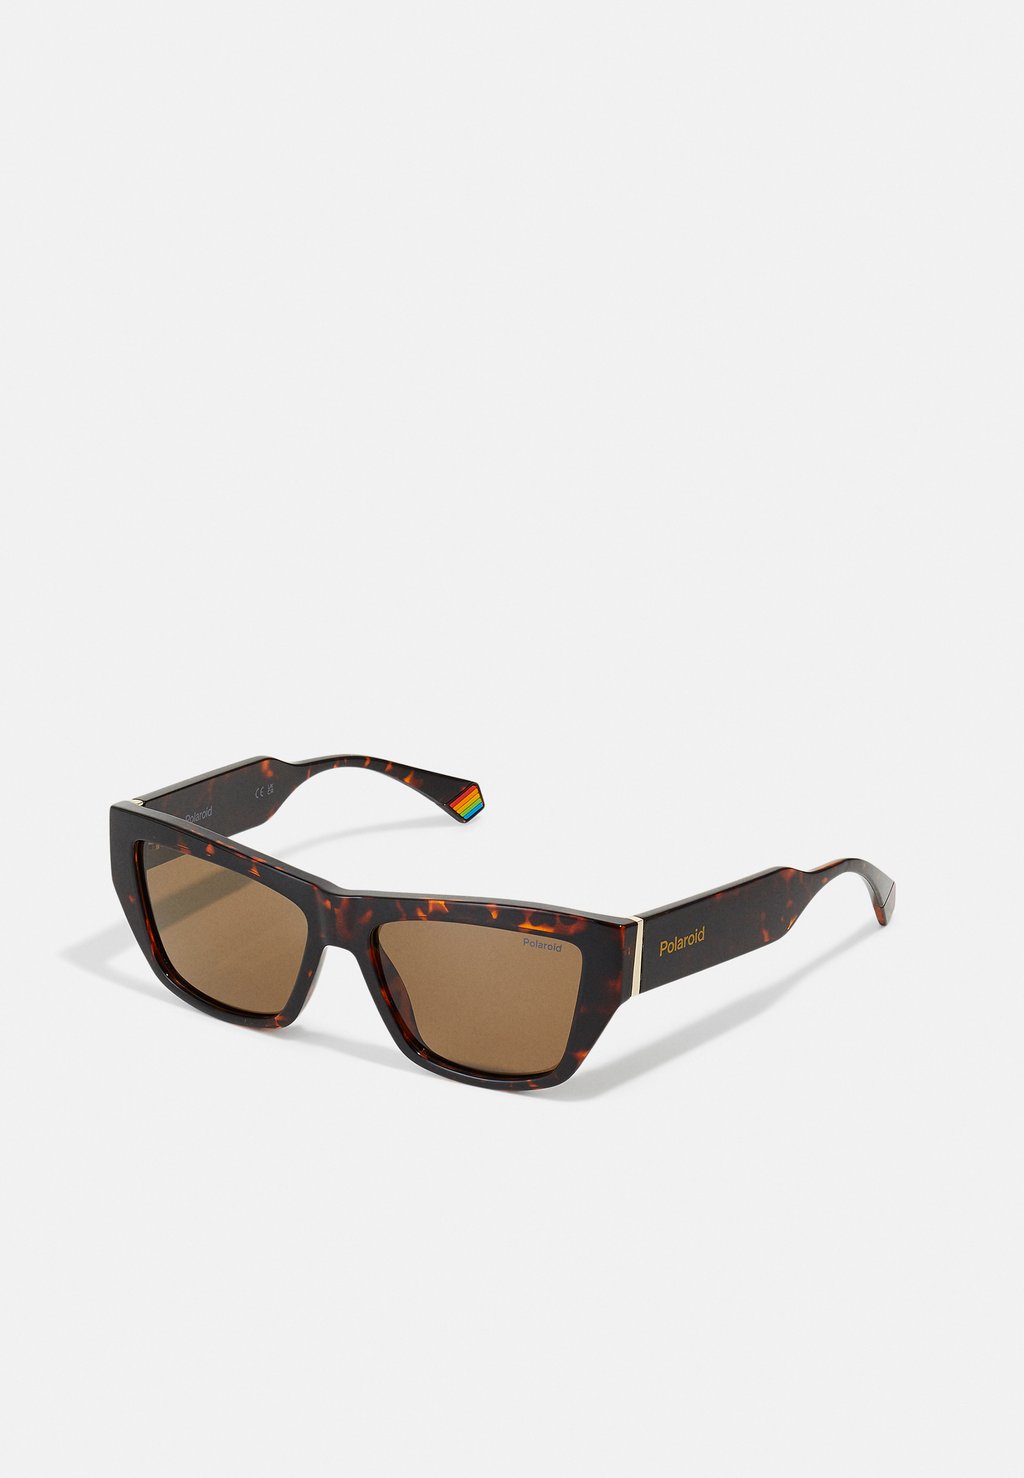 Солнцезащитные очки Polaroid, цвет havana